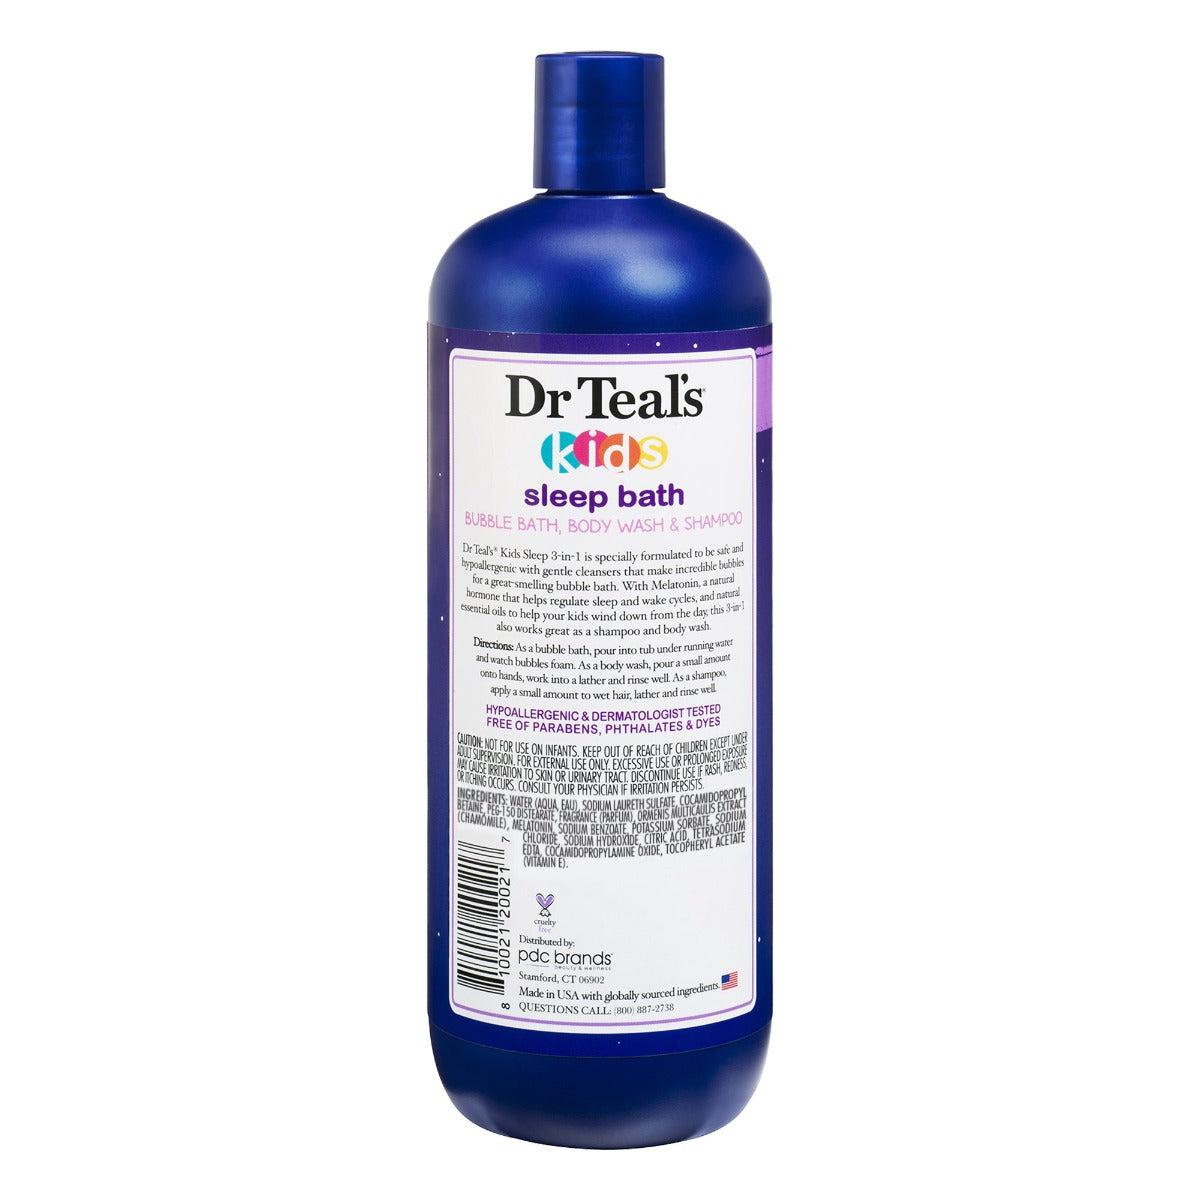 Dr Teal`s Kids 3-in-1 Bubble Bath, Body Wash & Shampoo Sleep Bath With Melatonin 591ml